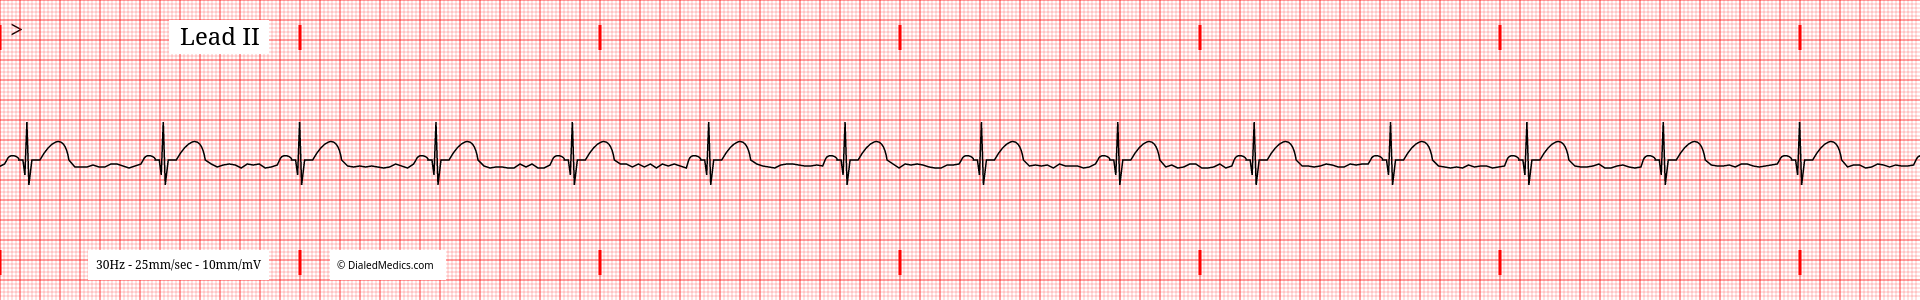 Example of a wandering baseline on an EKG tracing of Sinus Bradycardia.